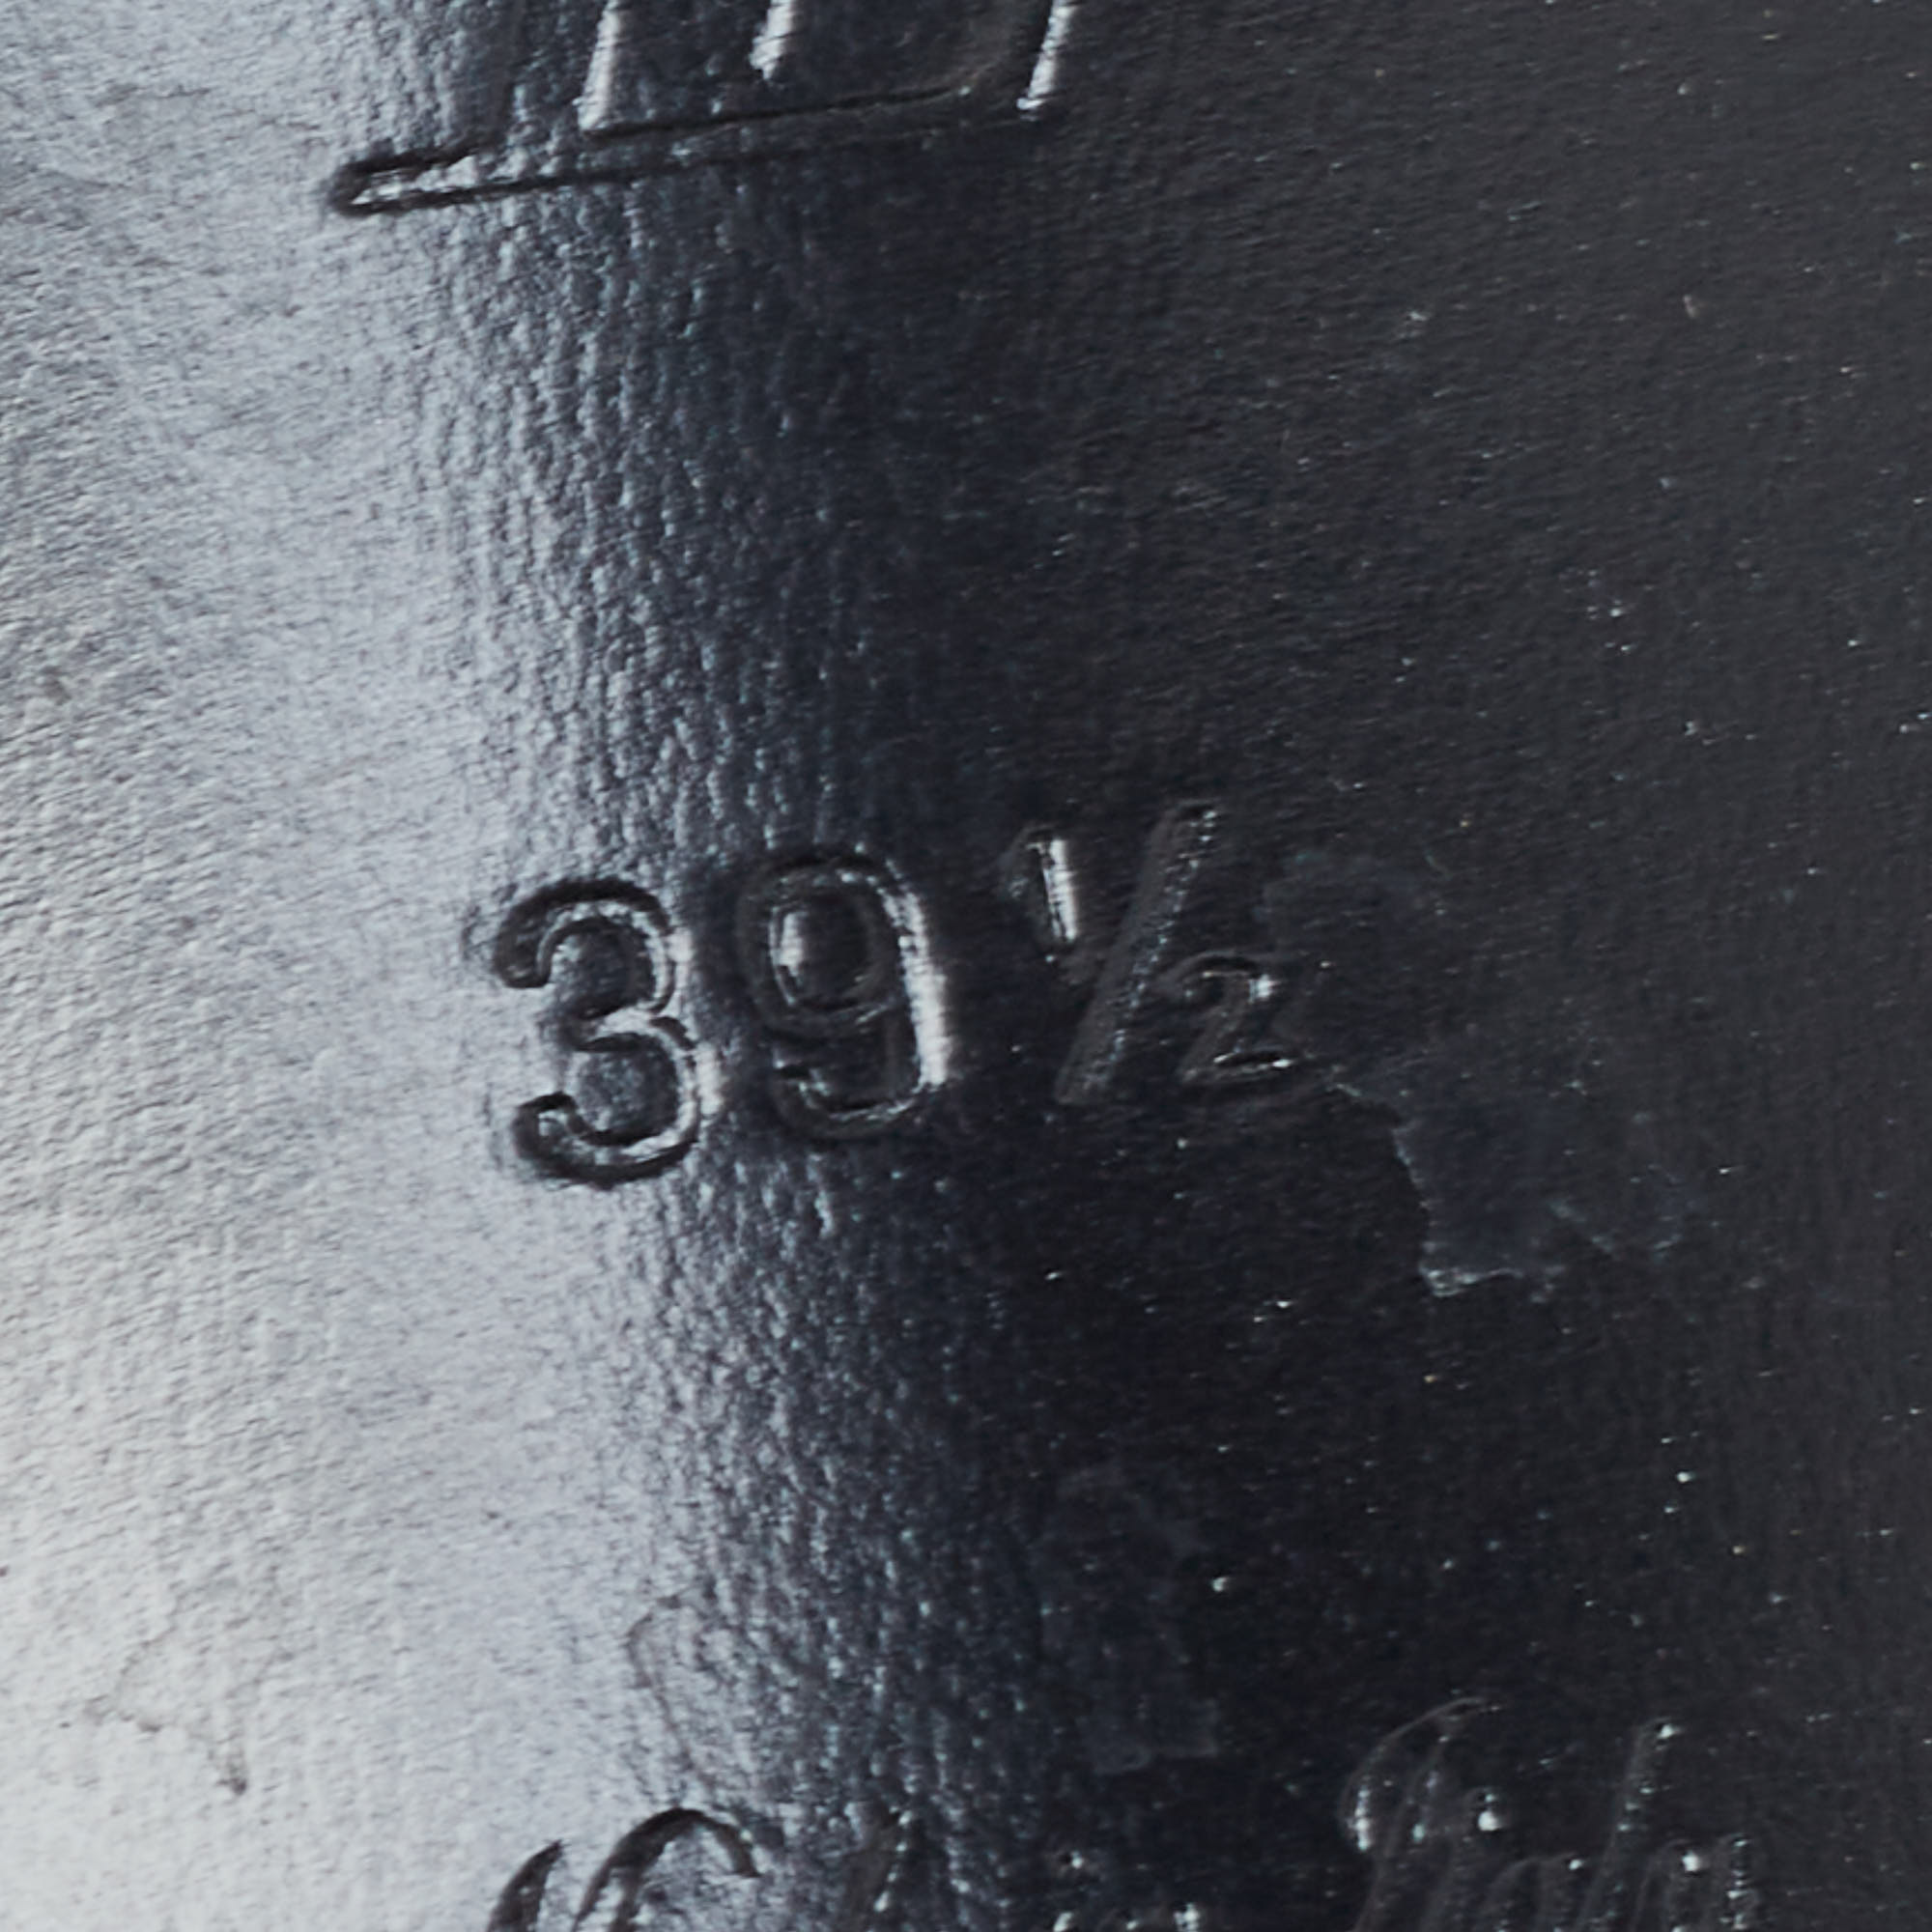 Louis Vuitton Brown/Black Monogram Canvas And Leather Lock It Slide Sandals Size 39.5